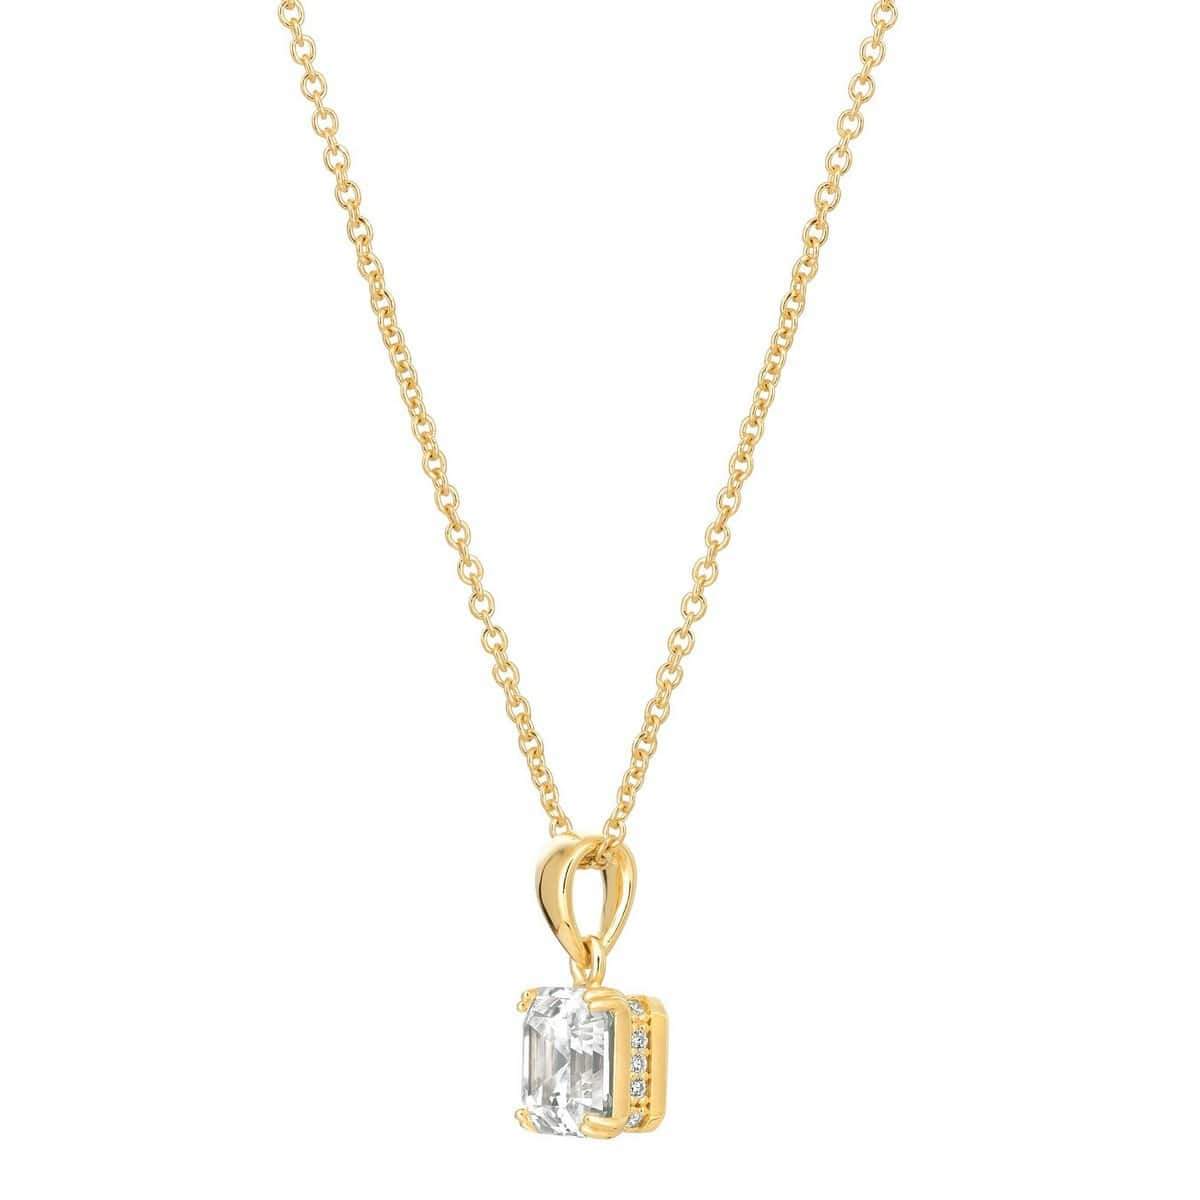 Crislu Jewelry CRISLU Royal Asscher Cut 4.10 Carat Pendant Necklace finished in 18KT Gold